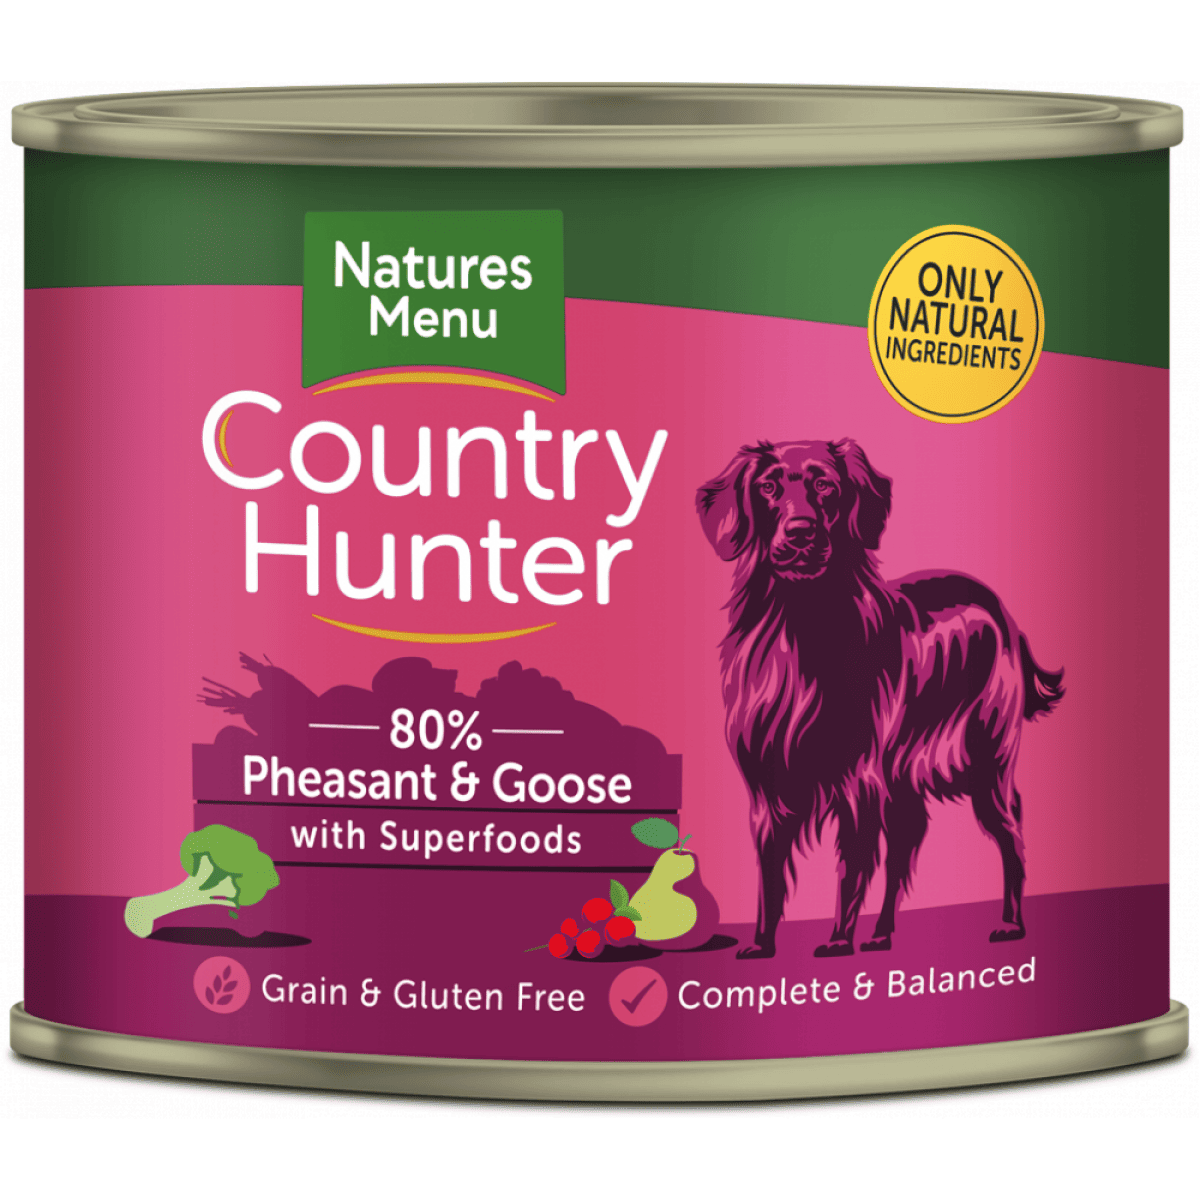 Country Hunter 80% Pheasant & Goose 600g Main Image